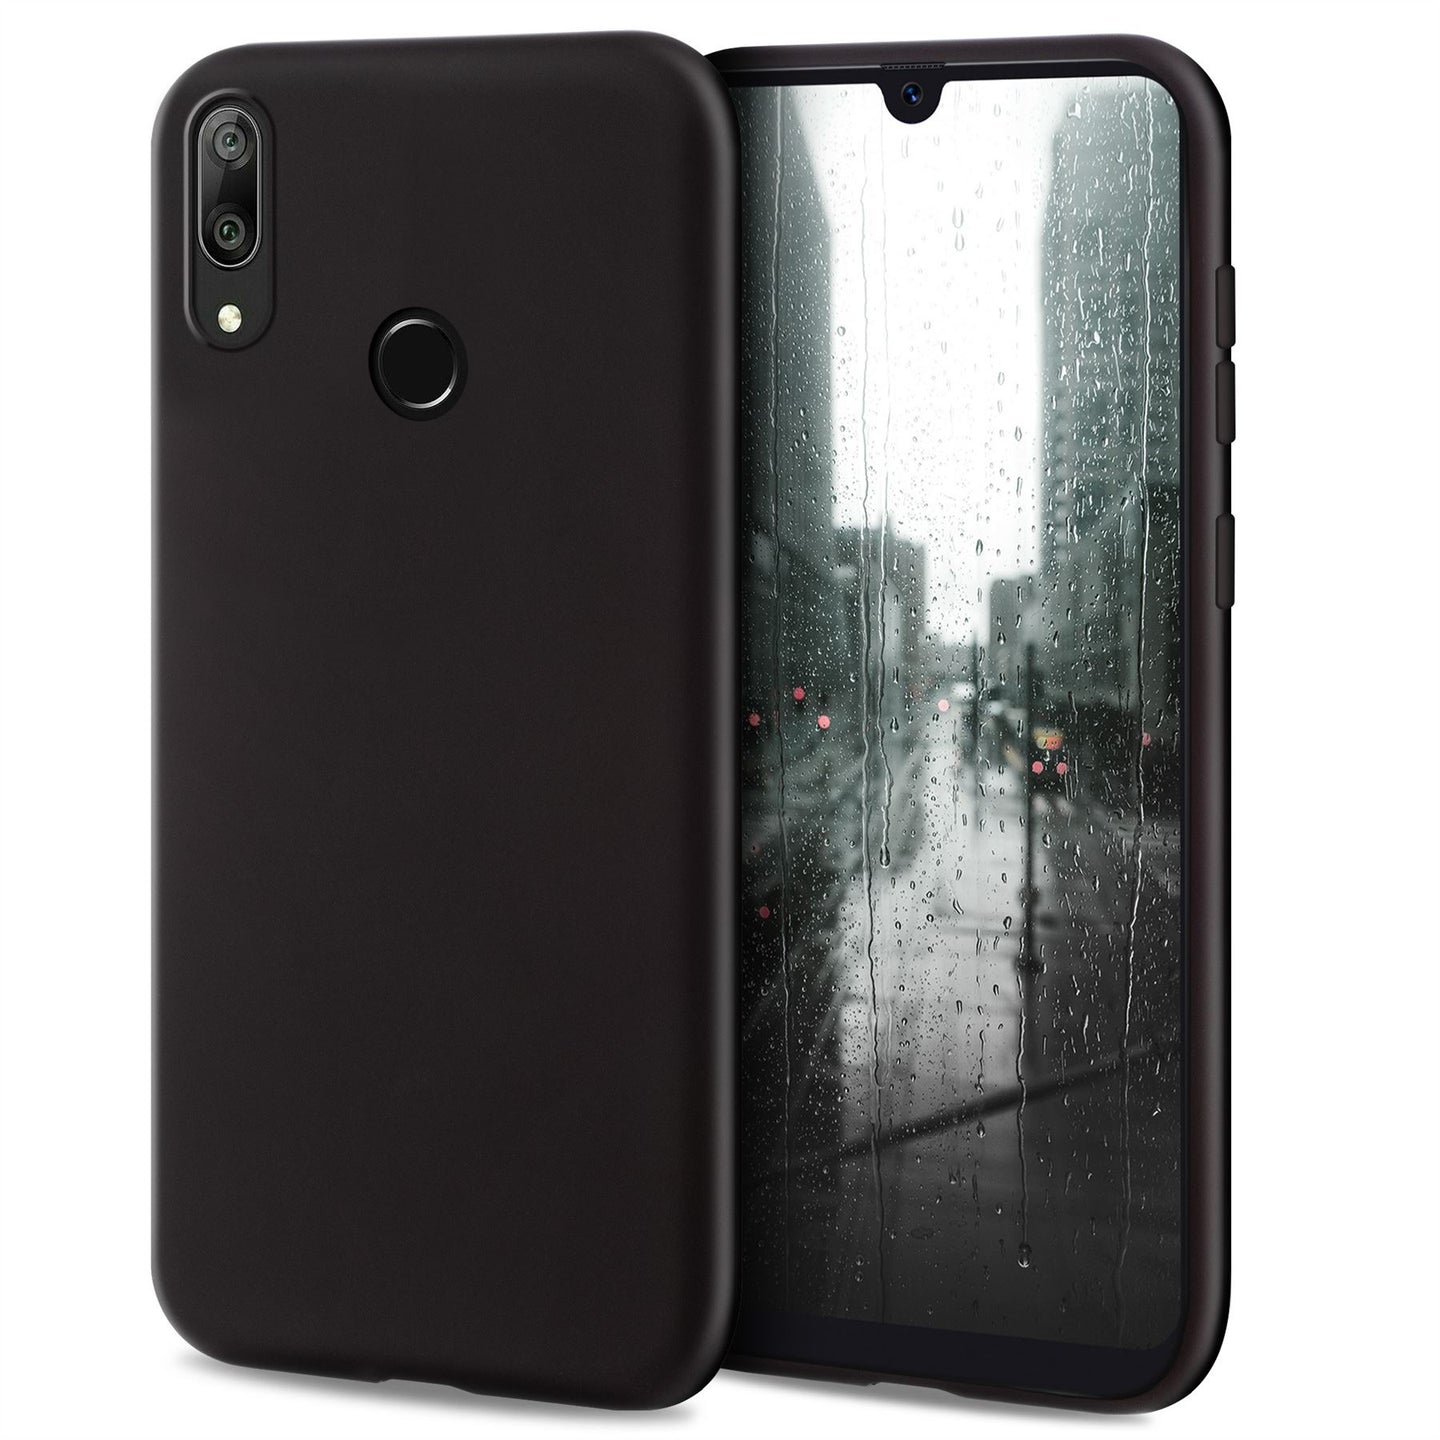 Moozy Minimalist Series Silicone Case for Huawei Y7 2019, Black - Matte Finish Slim Soft TPU Cover